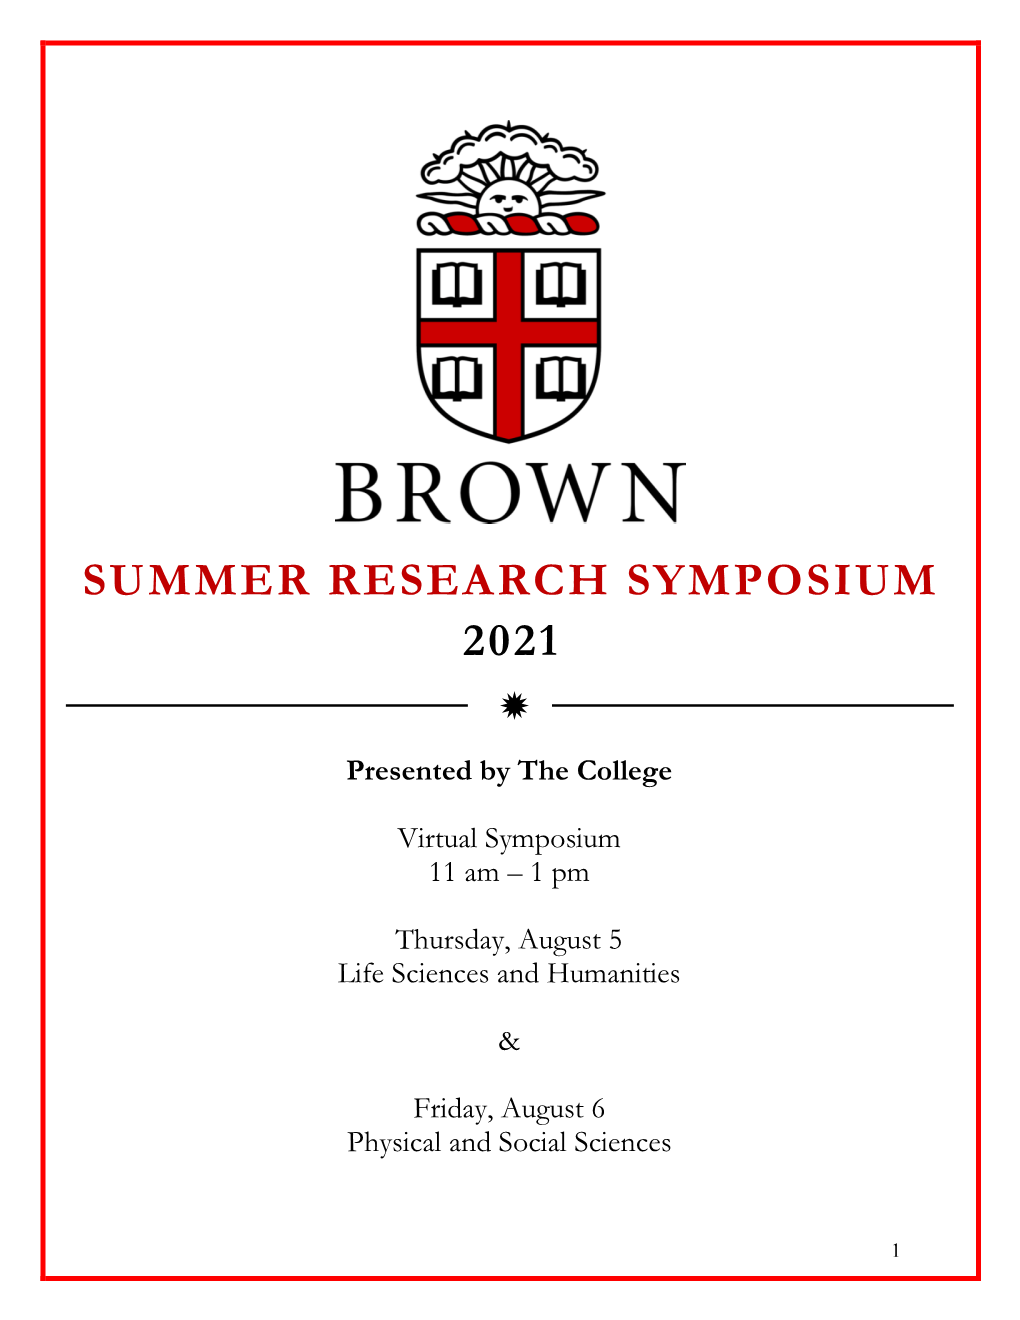 Summer Research Symposium 2021 